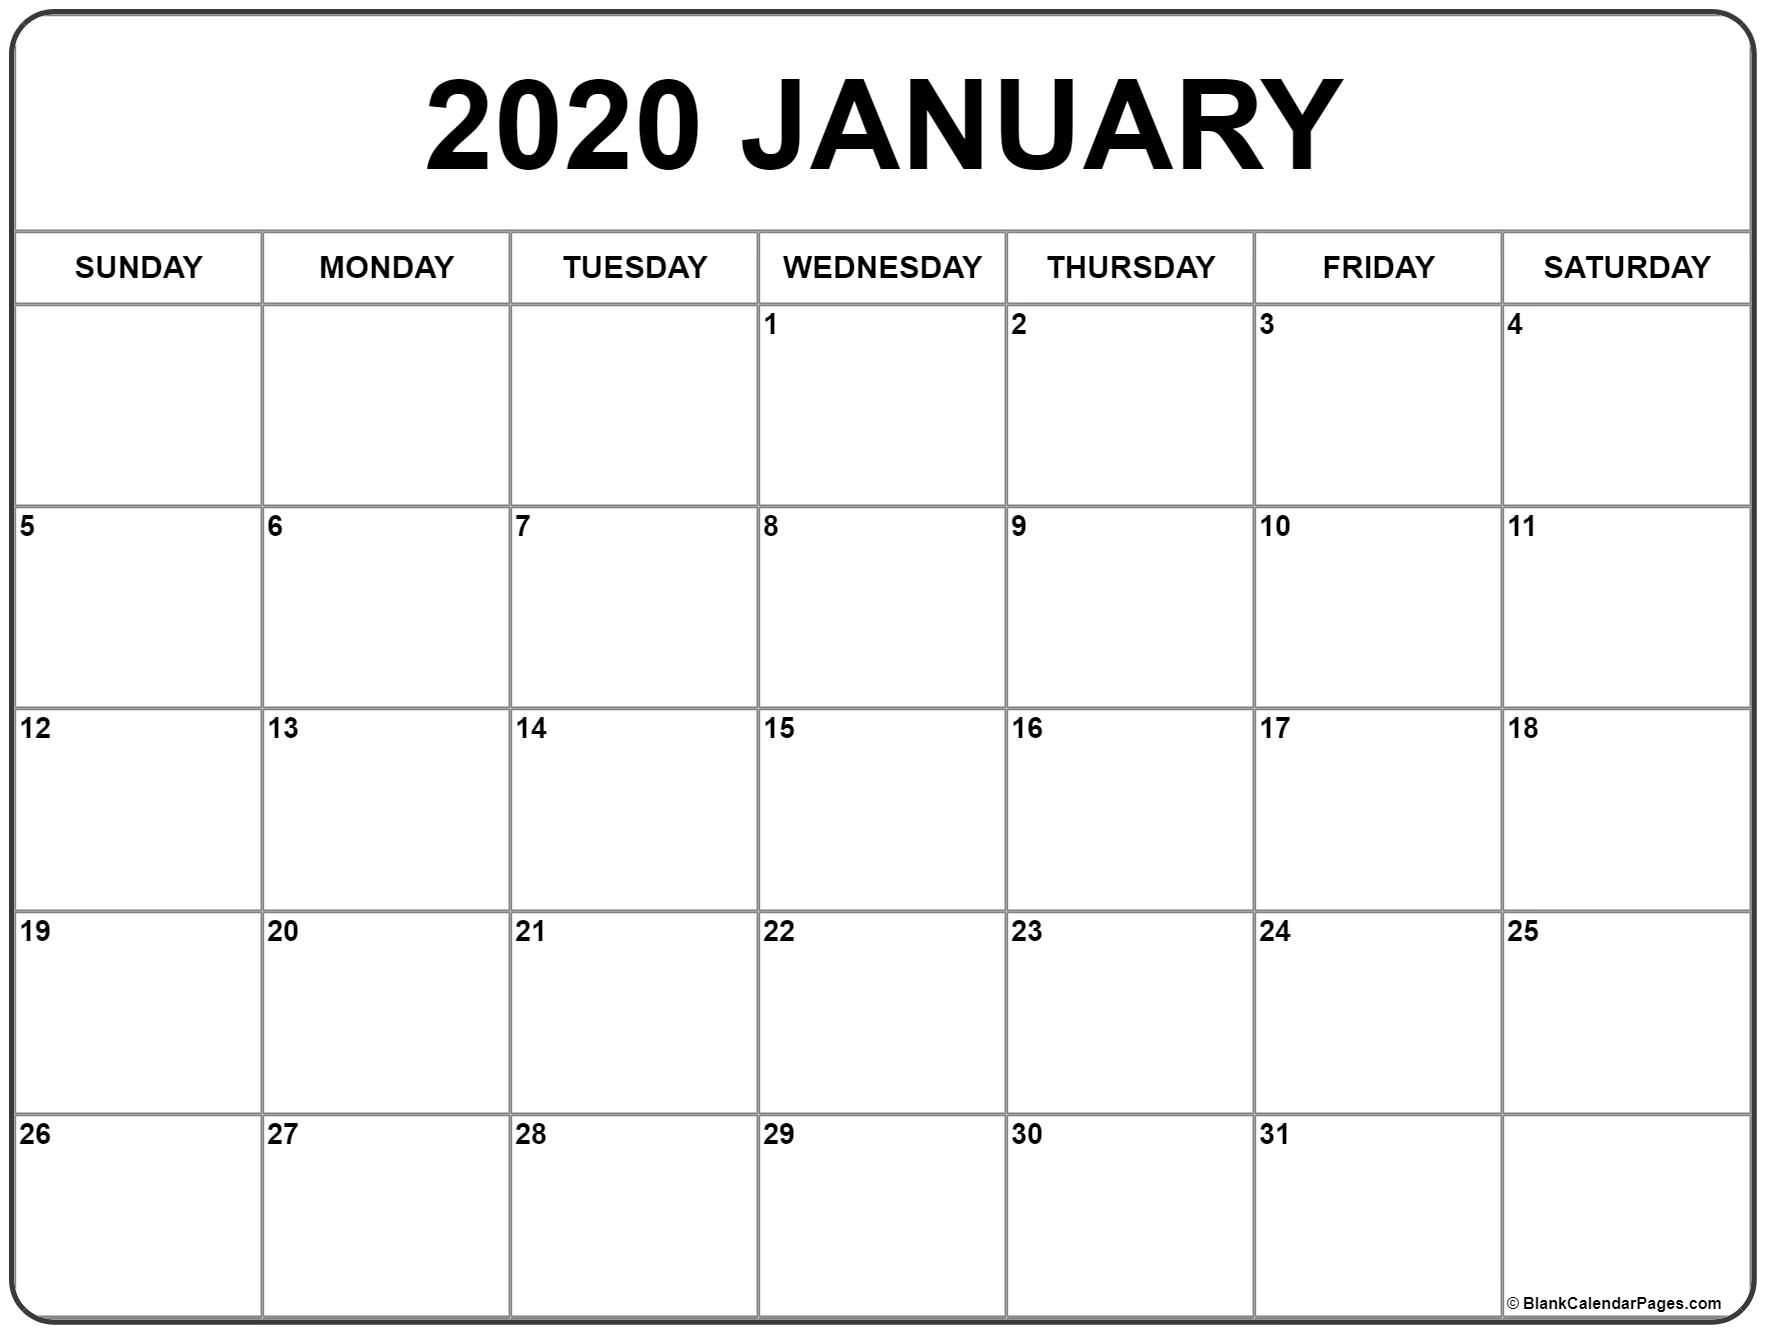 January 2020 Calendar | Free Printable Monthly Calendars Dashing Printable Calendars 2020 Black And White